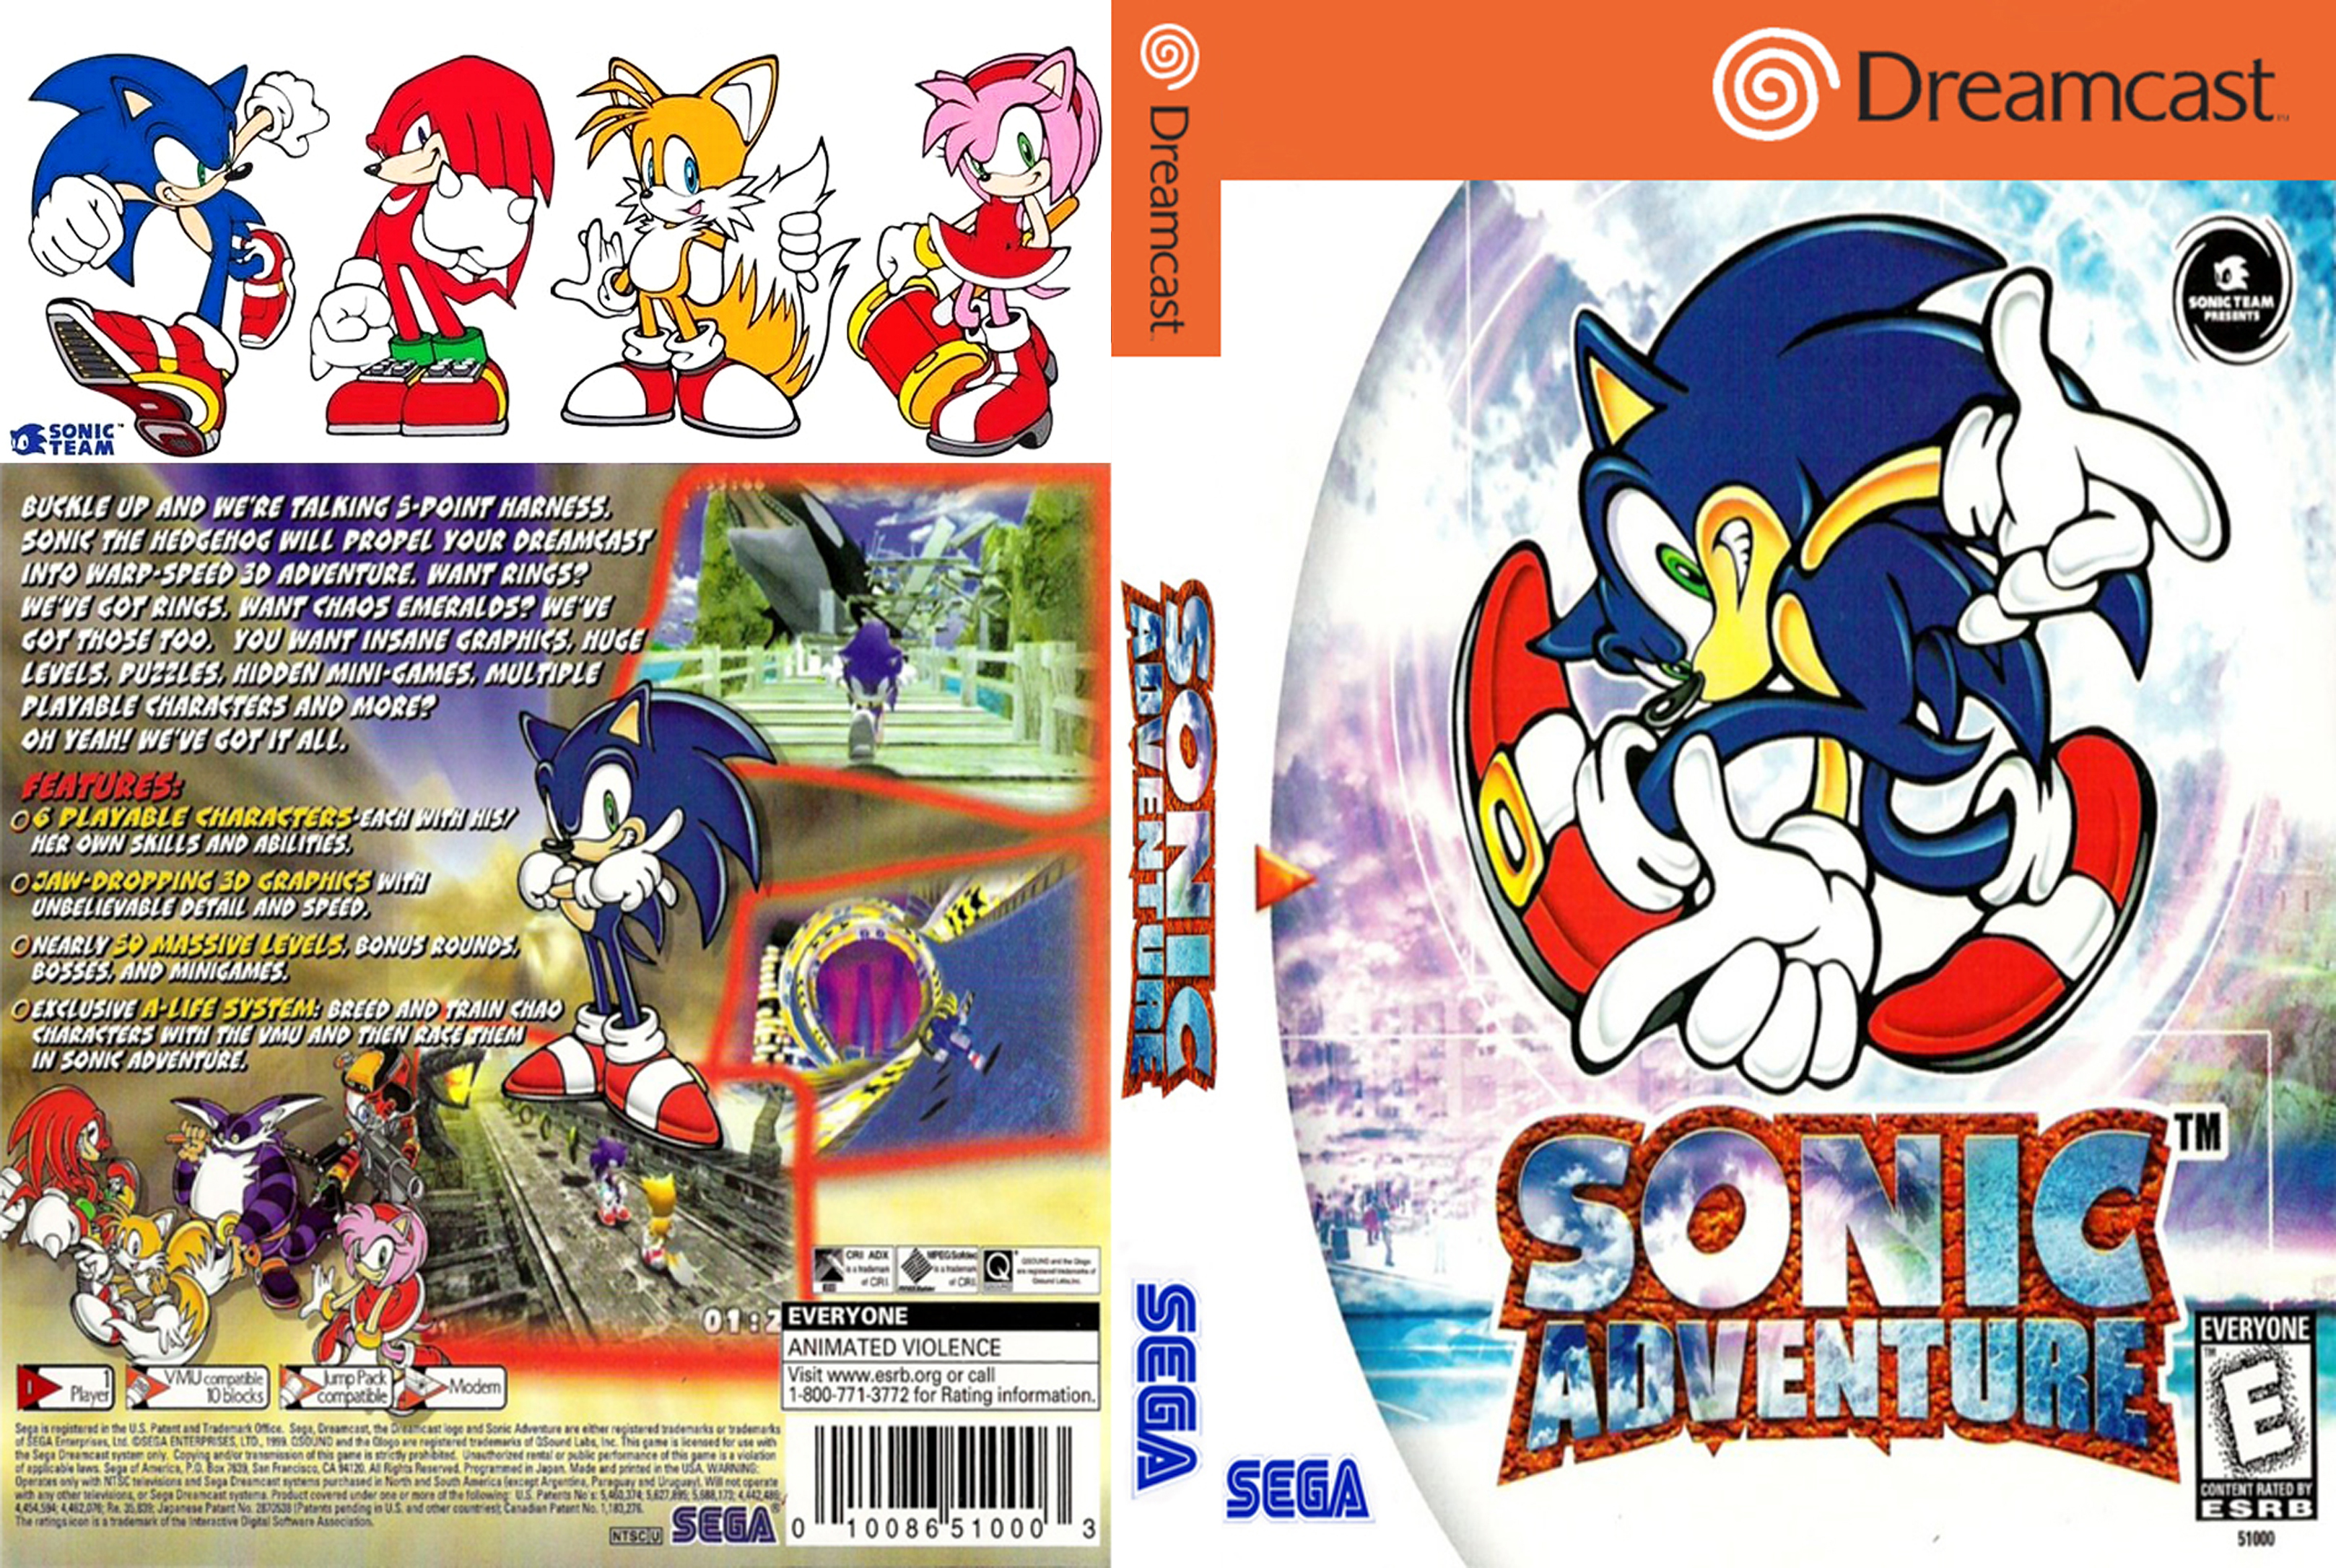 Sonic Adventure 2 Dreamcast обложка. Sonic Adventure 2 диск. Sonic Adventure Dreamcast обложка. Sonic Adventure 2 обложка Дримкаст. Dreamcast roms sonic